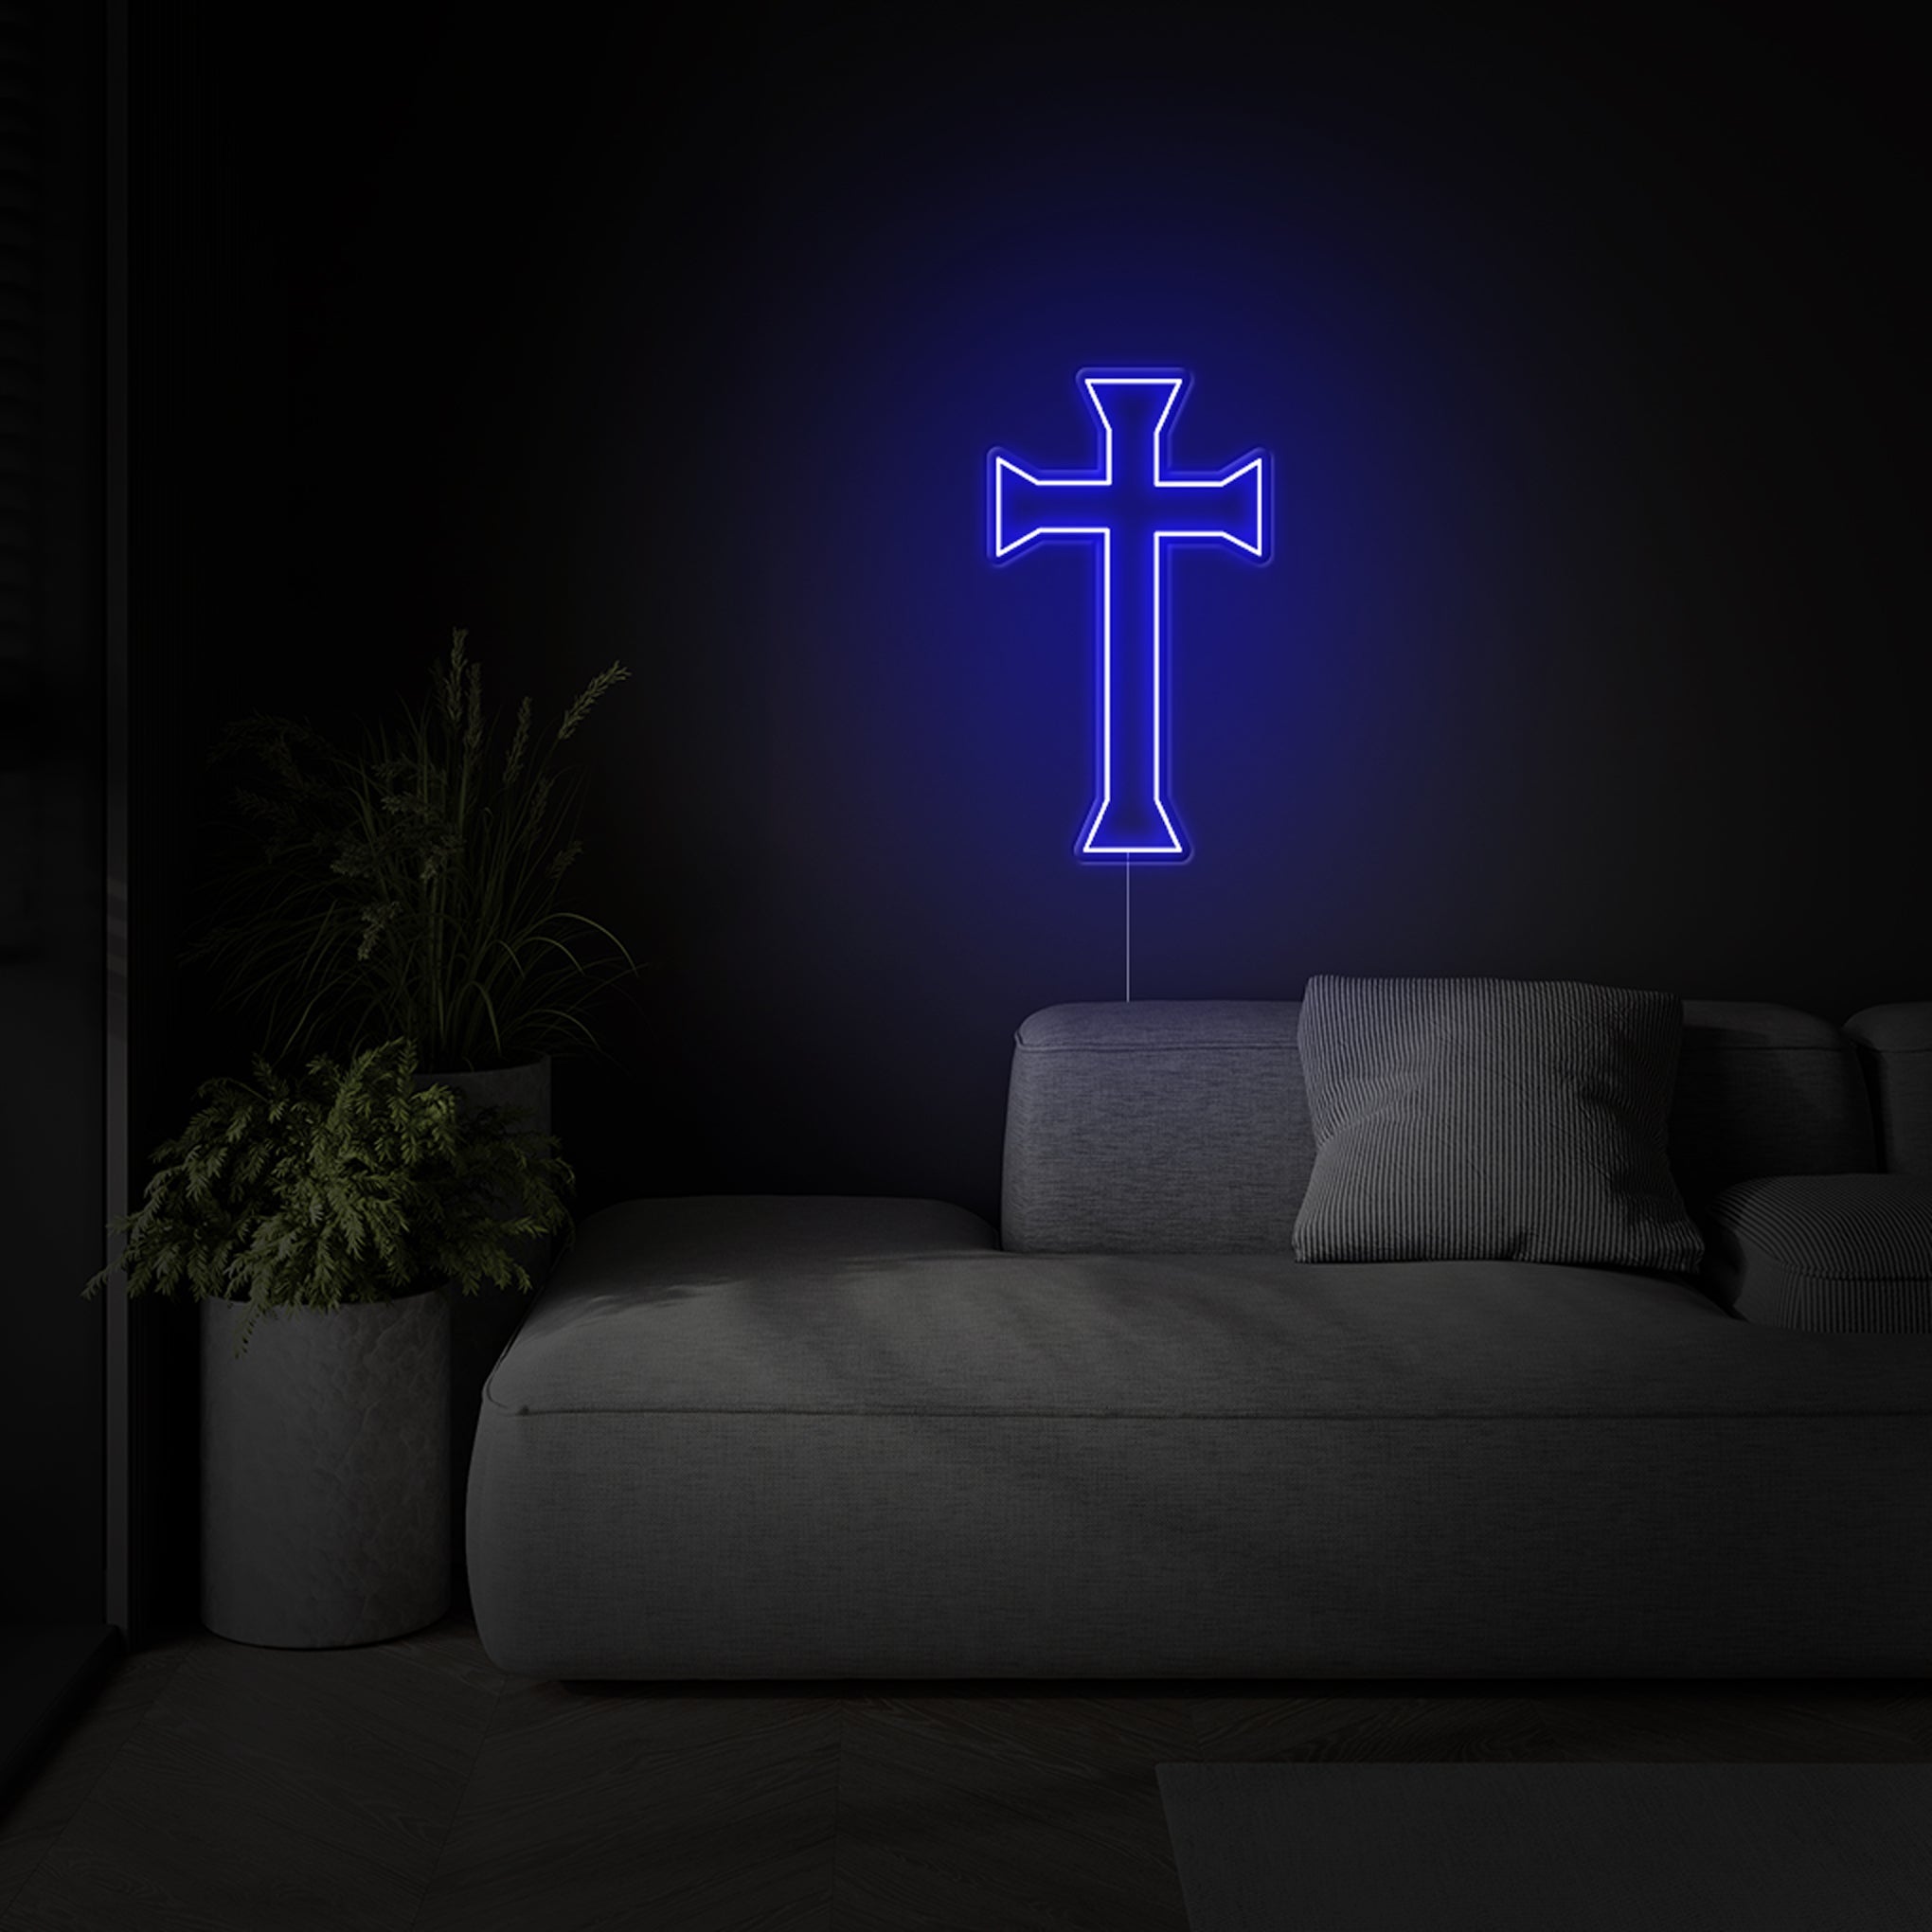 'Christian Cross' LED Neon Sign - Iconic Neon